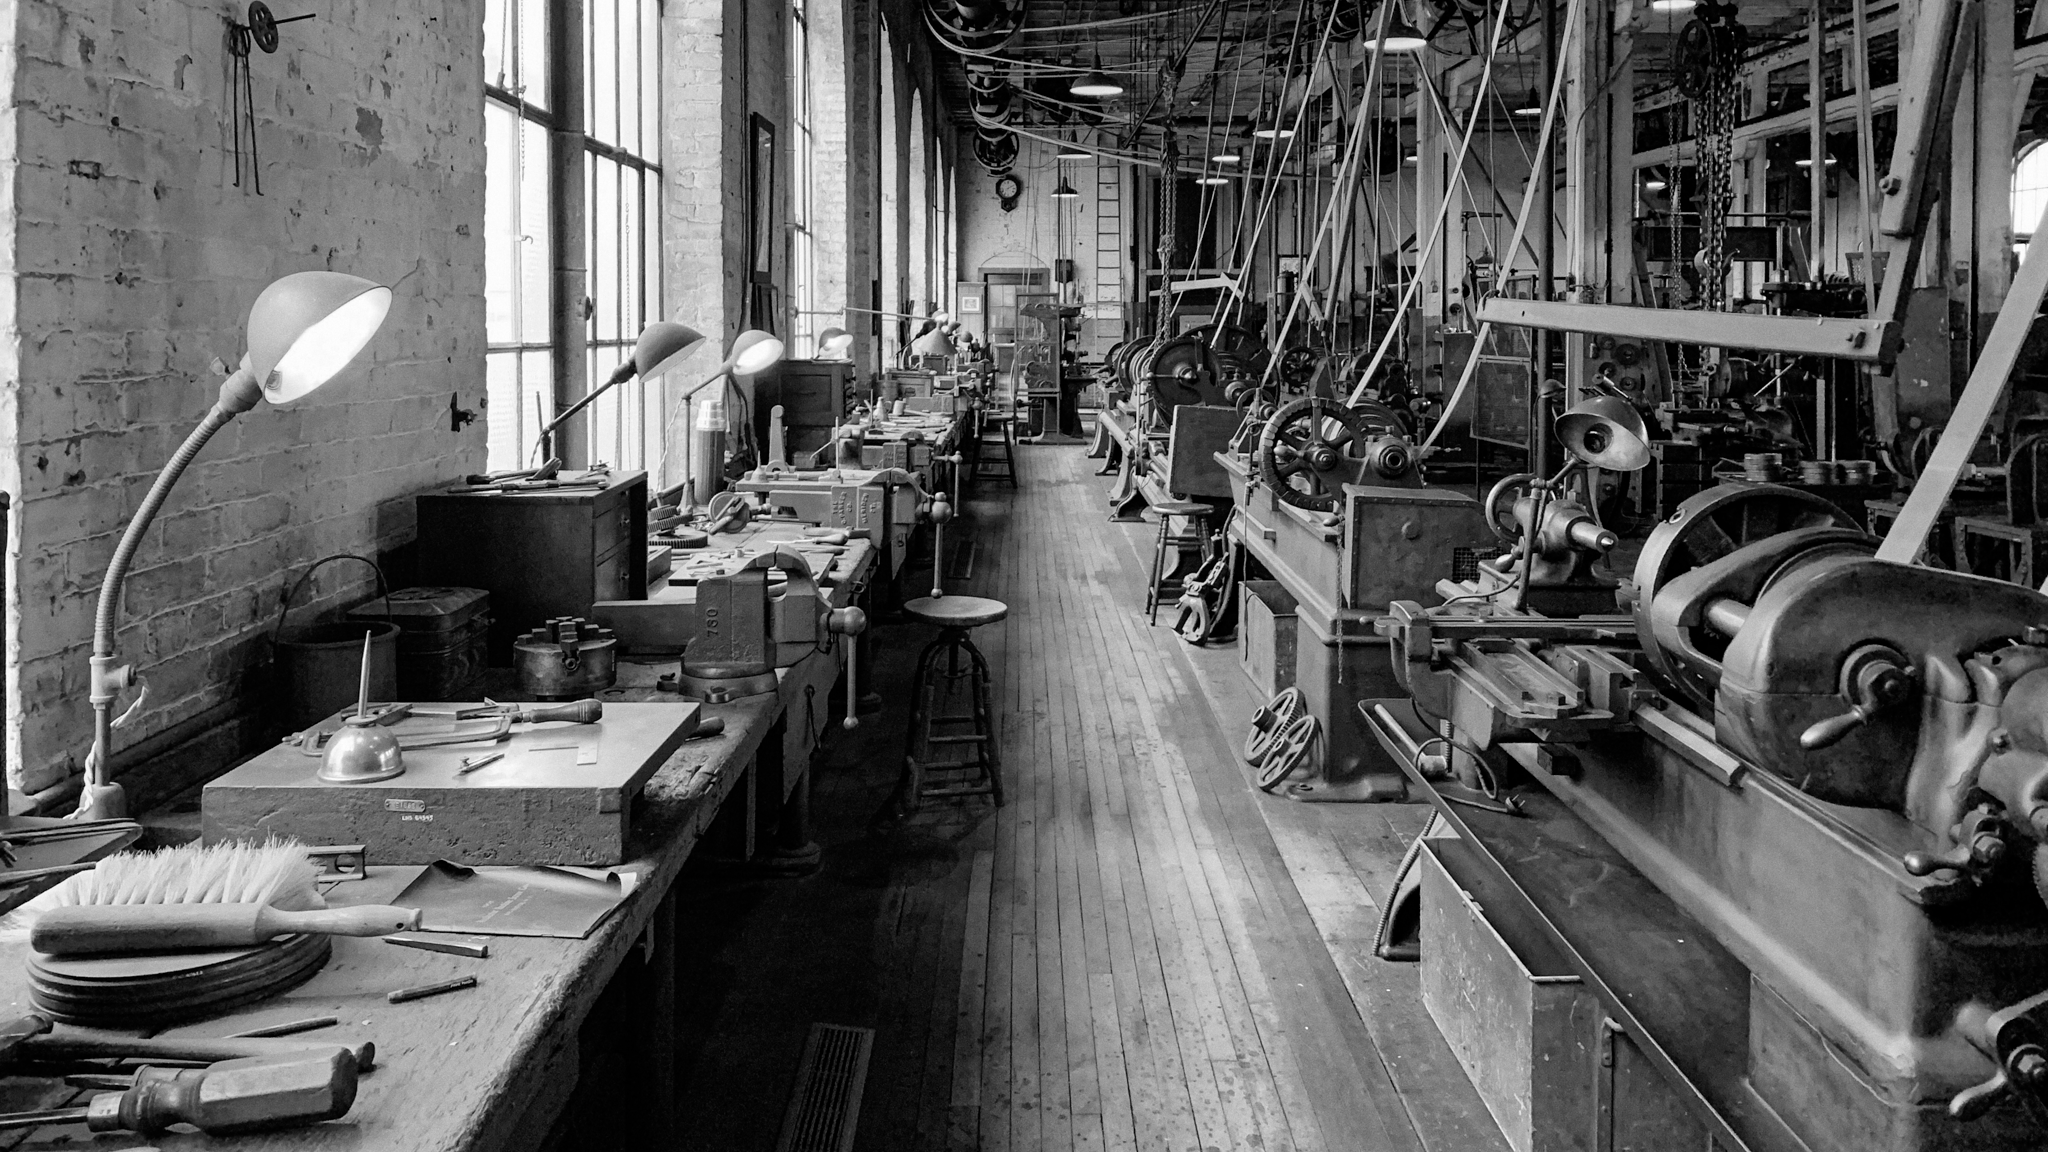  The machine shops at Thomas Edison's laboratories in West Orange, New Jersey. 